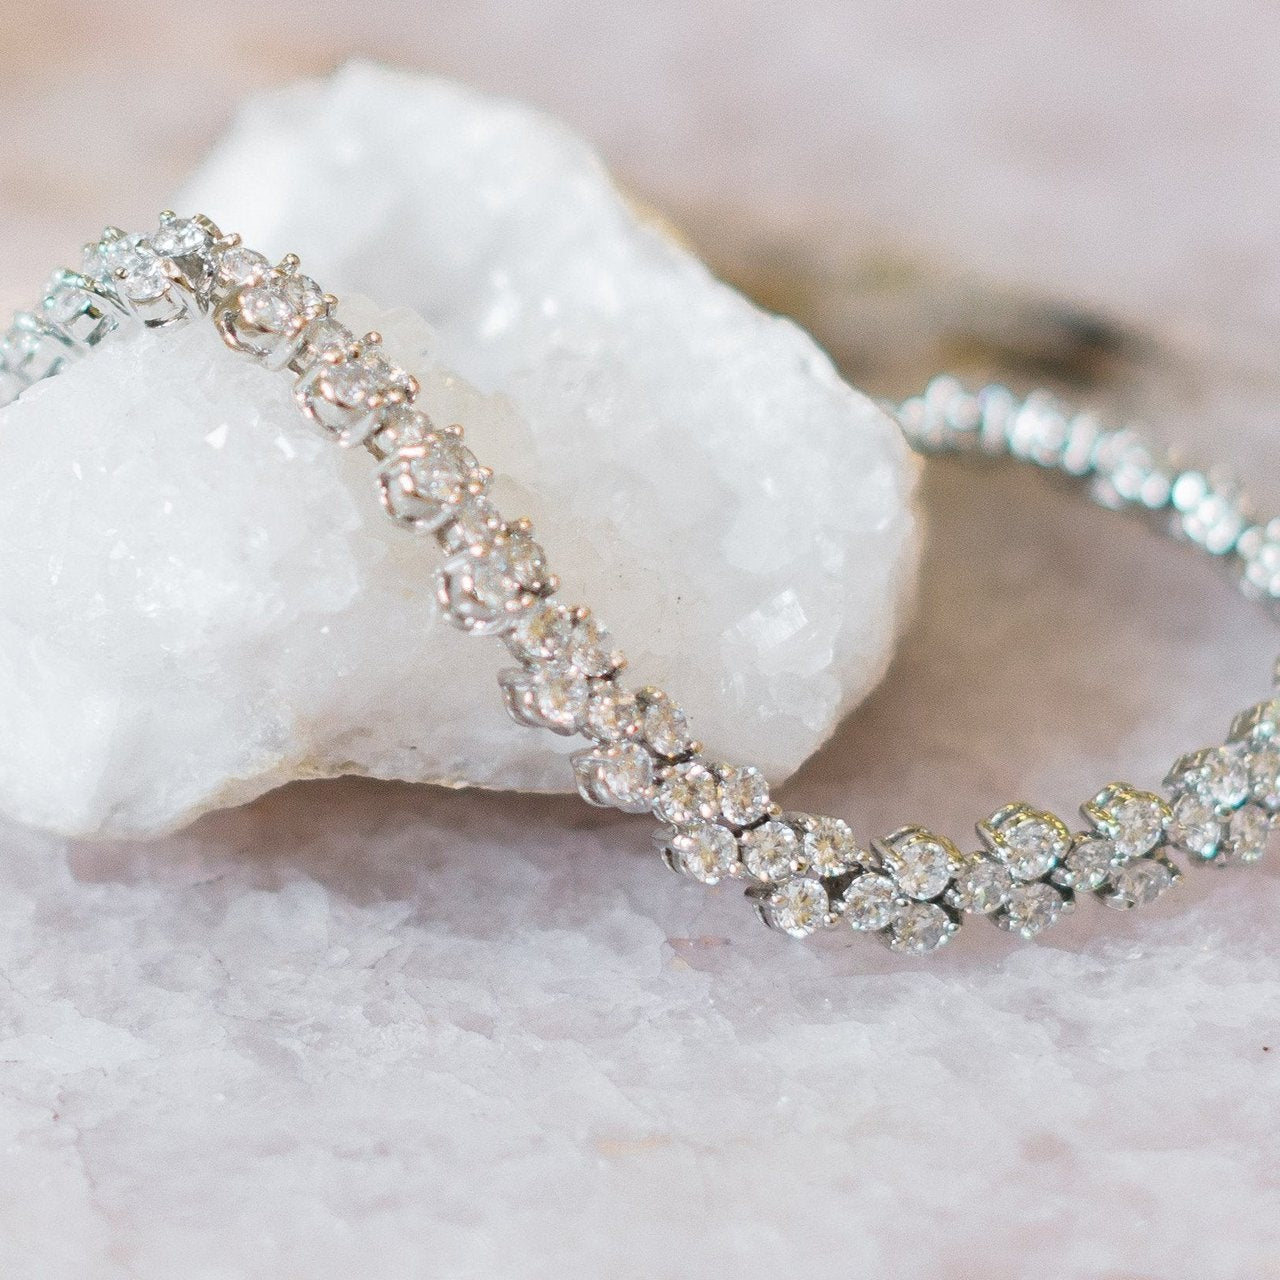 Jules Bridal - Anastasia, Silver and Crystal Bracelet